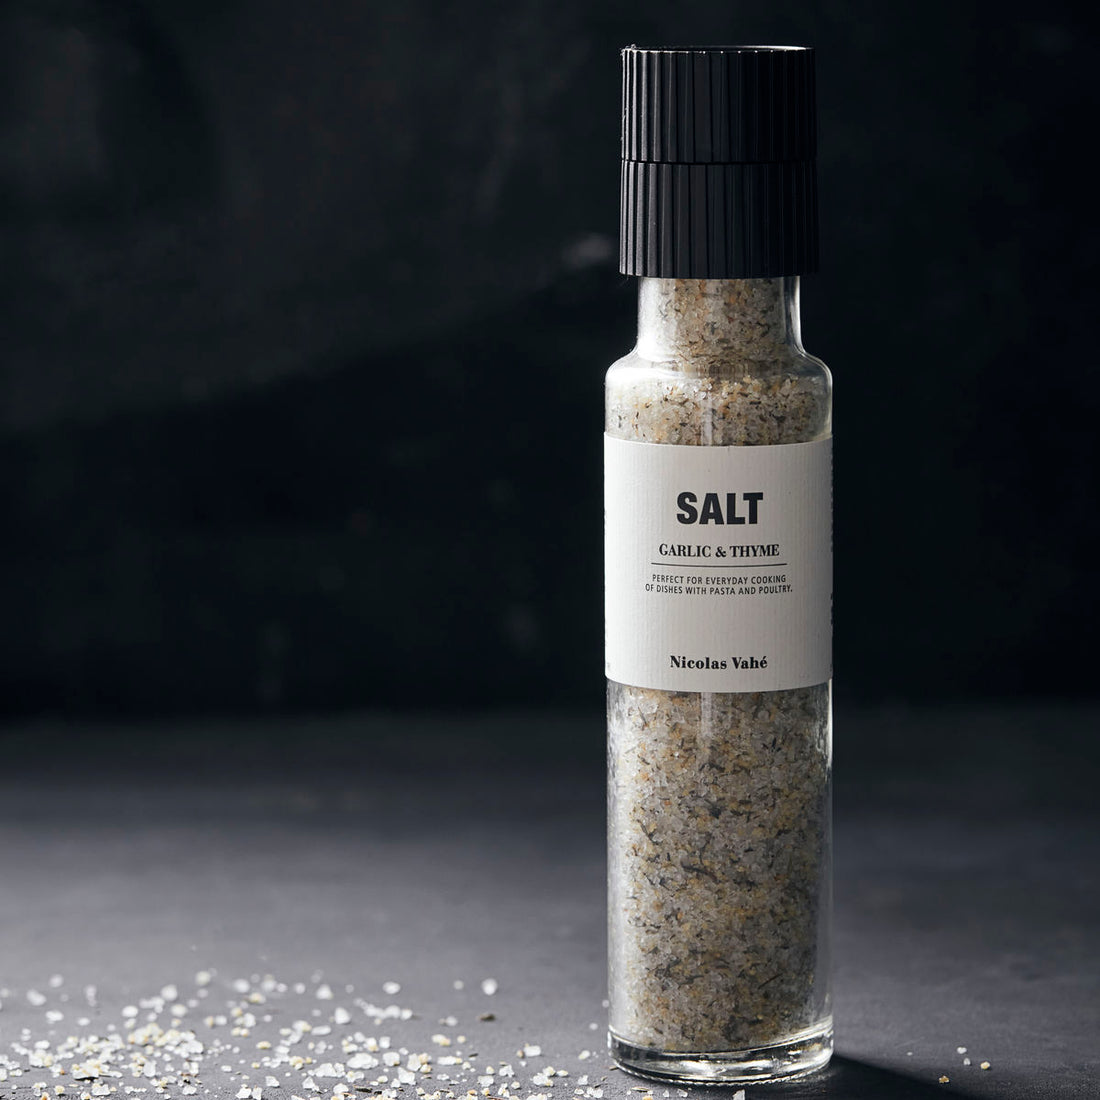 Salt, Garlic &amp; Thyme